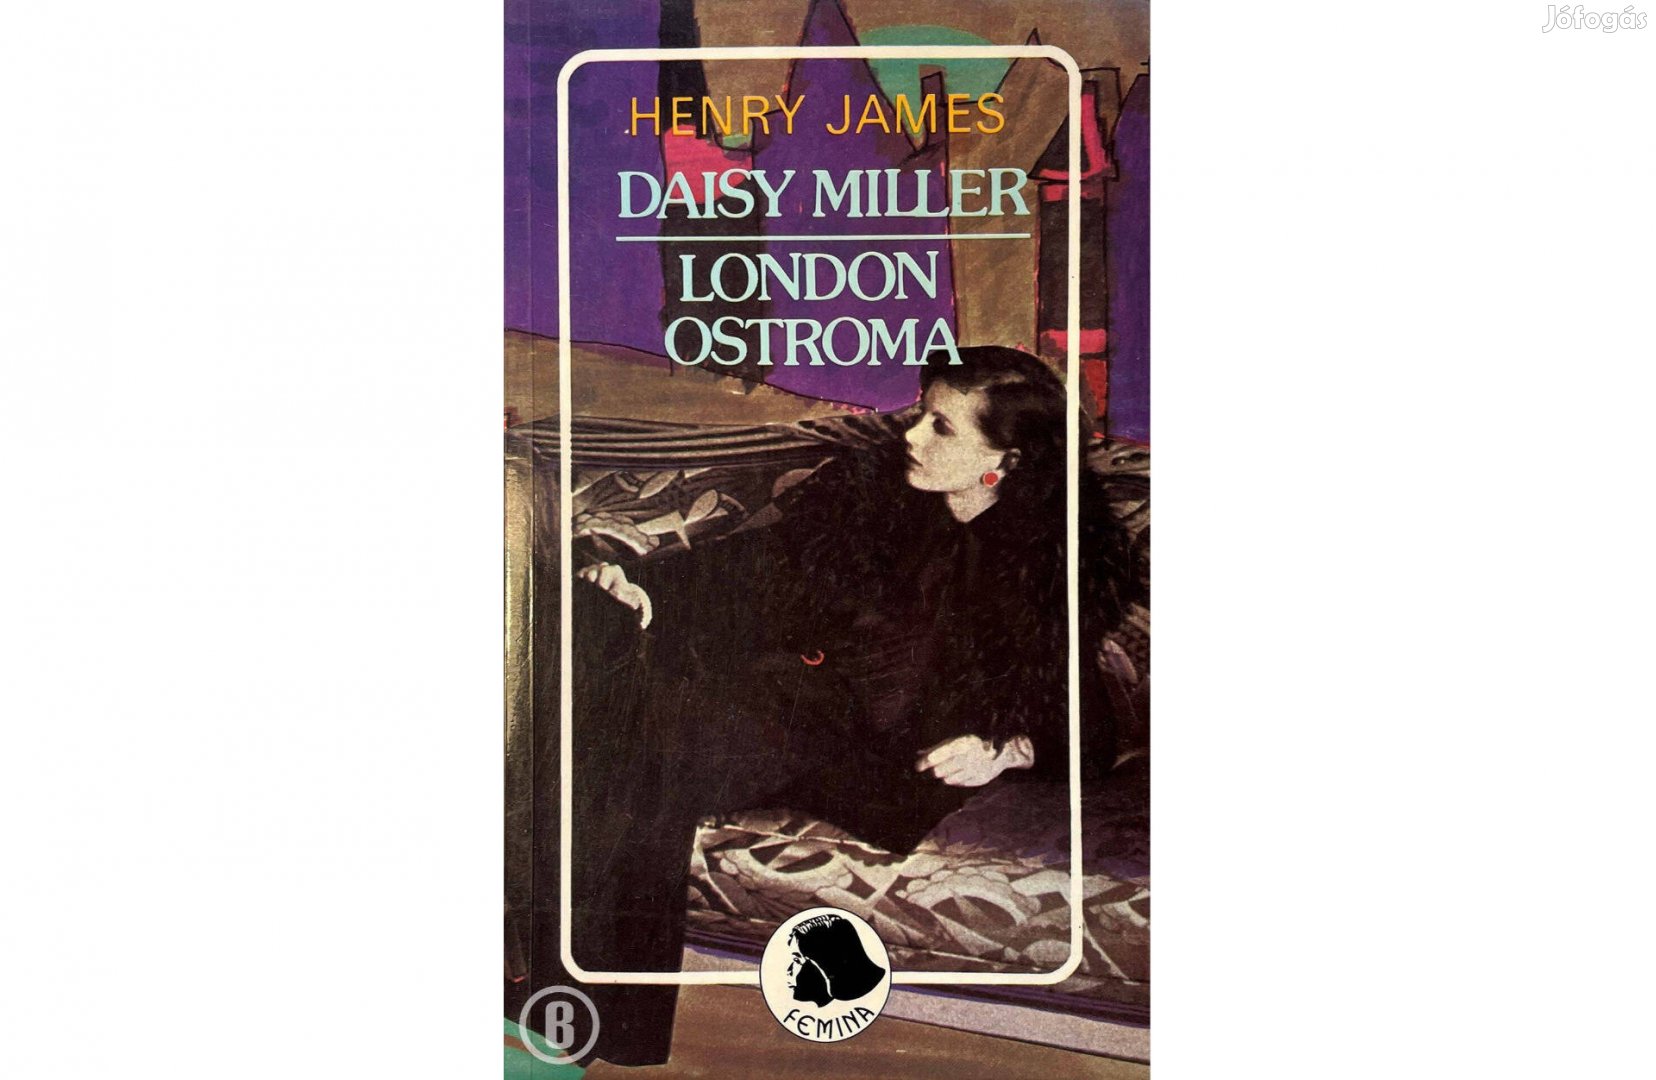 Henry James: Daisy Miller, London ostroma